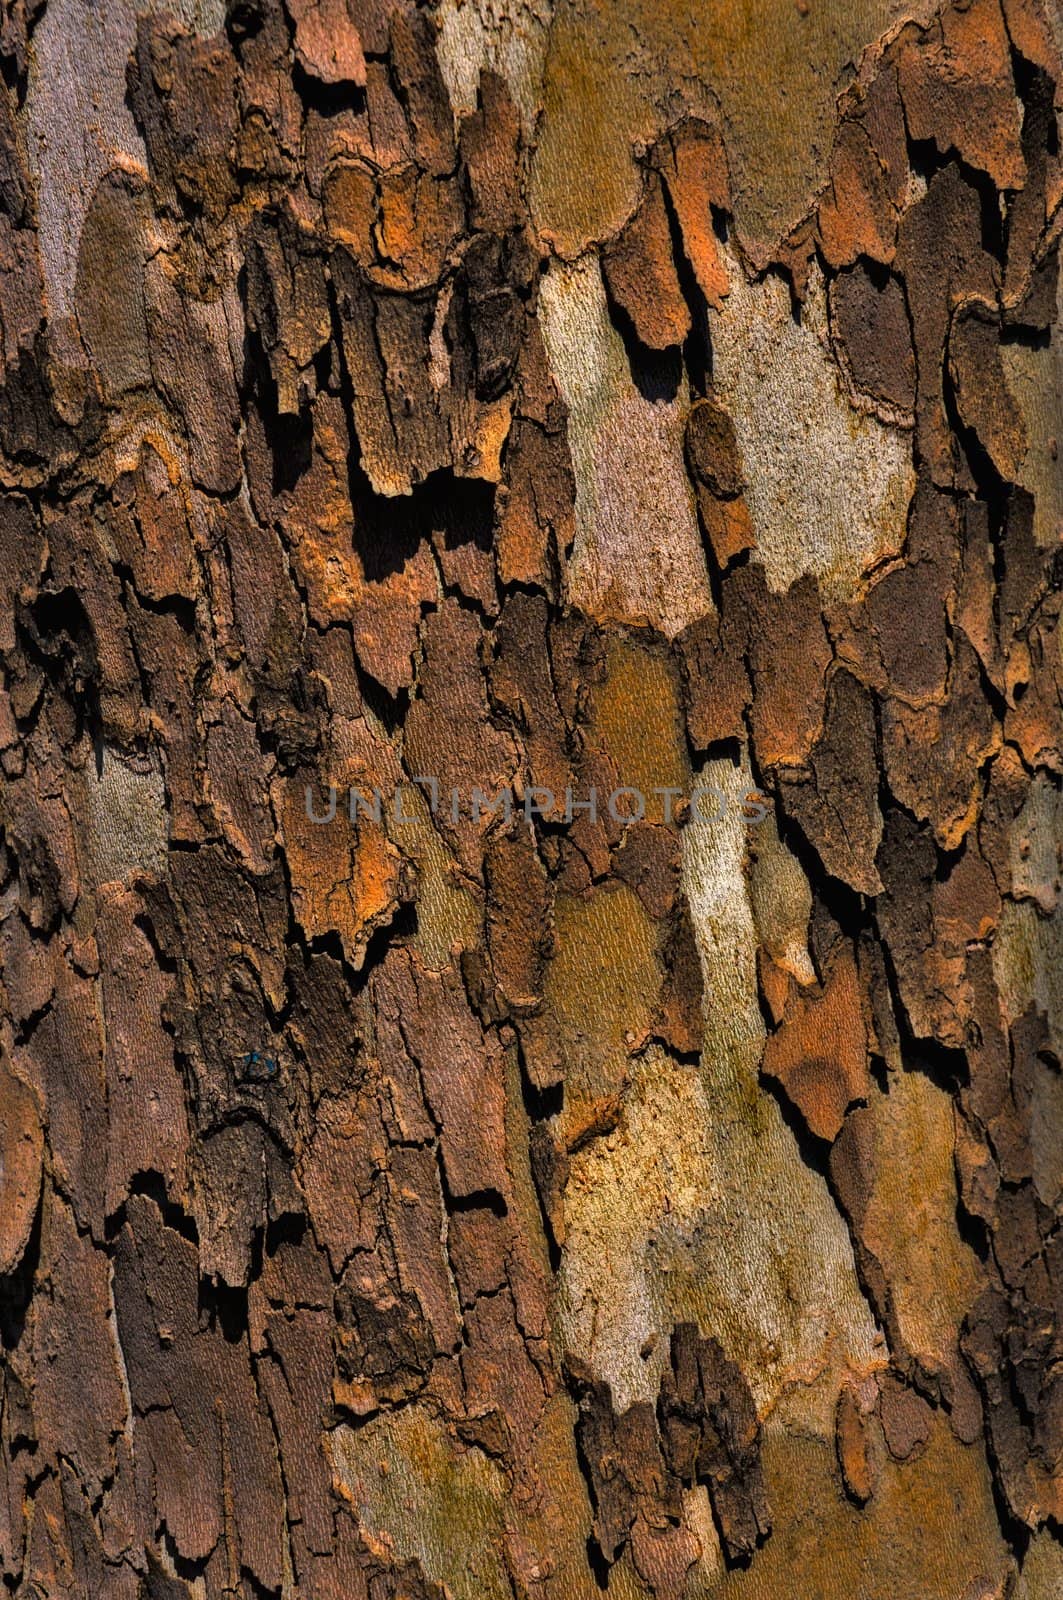 Background - sycamore bark